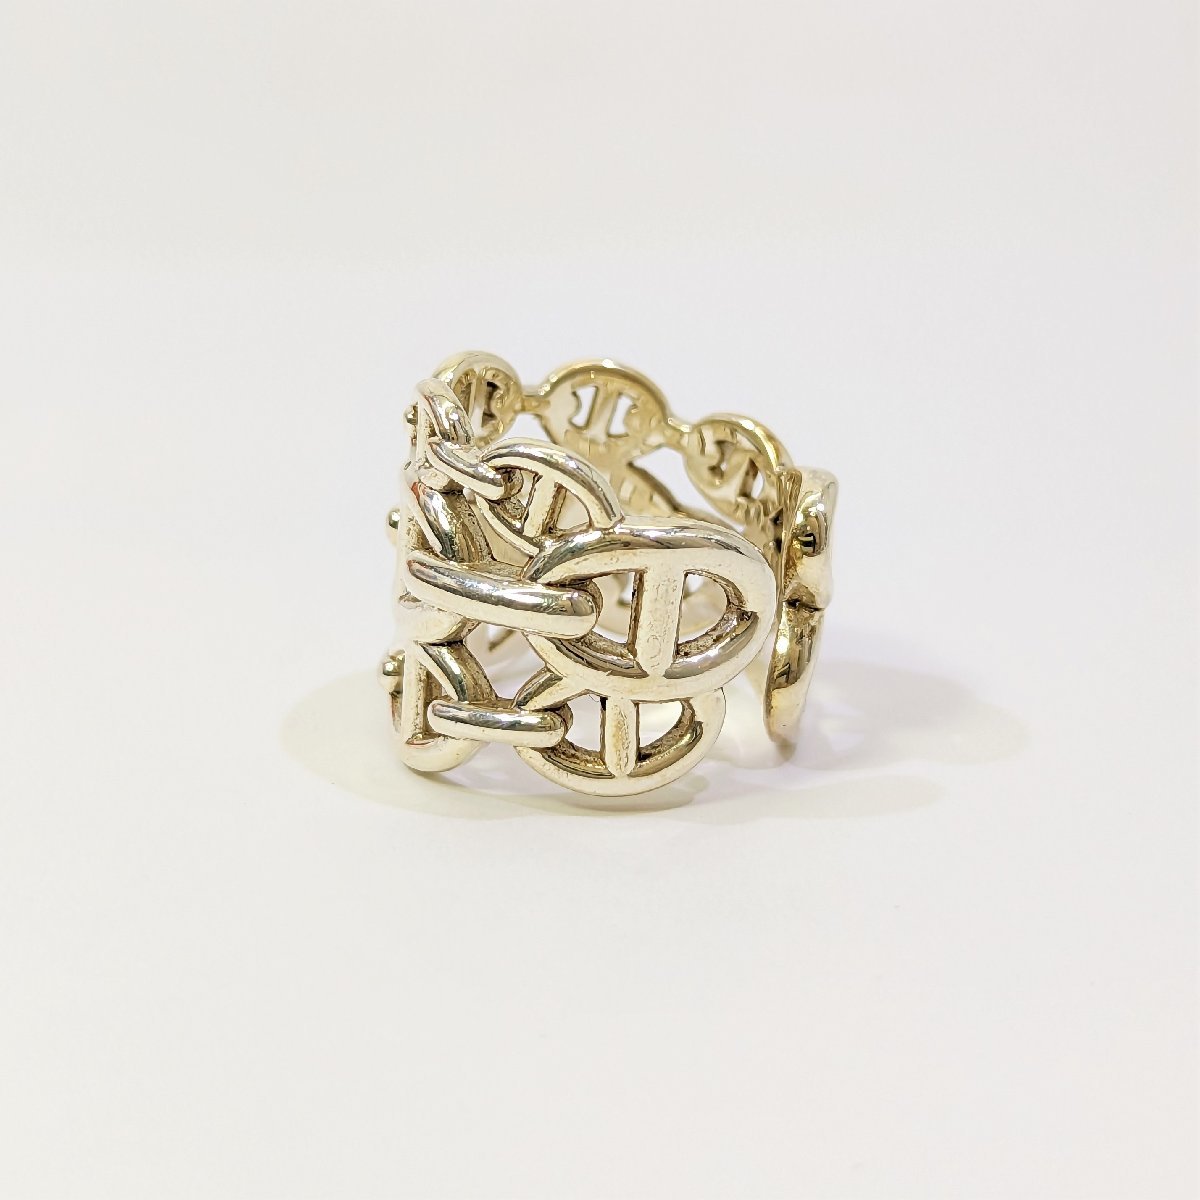  Hermes HERMESshe-n Dunk ru Anne sheneGM серебряное кольцо #56 Япония размер примерно 16 номер 3 полосный дизайн Ag925 sterling серебряный кольцо 